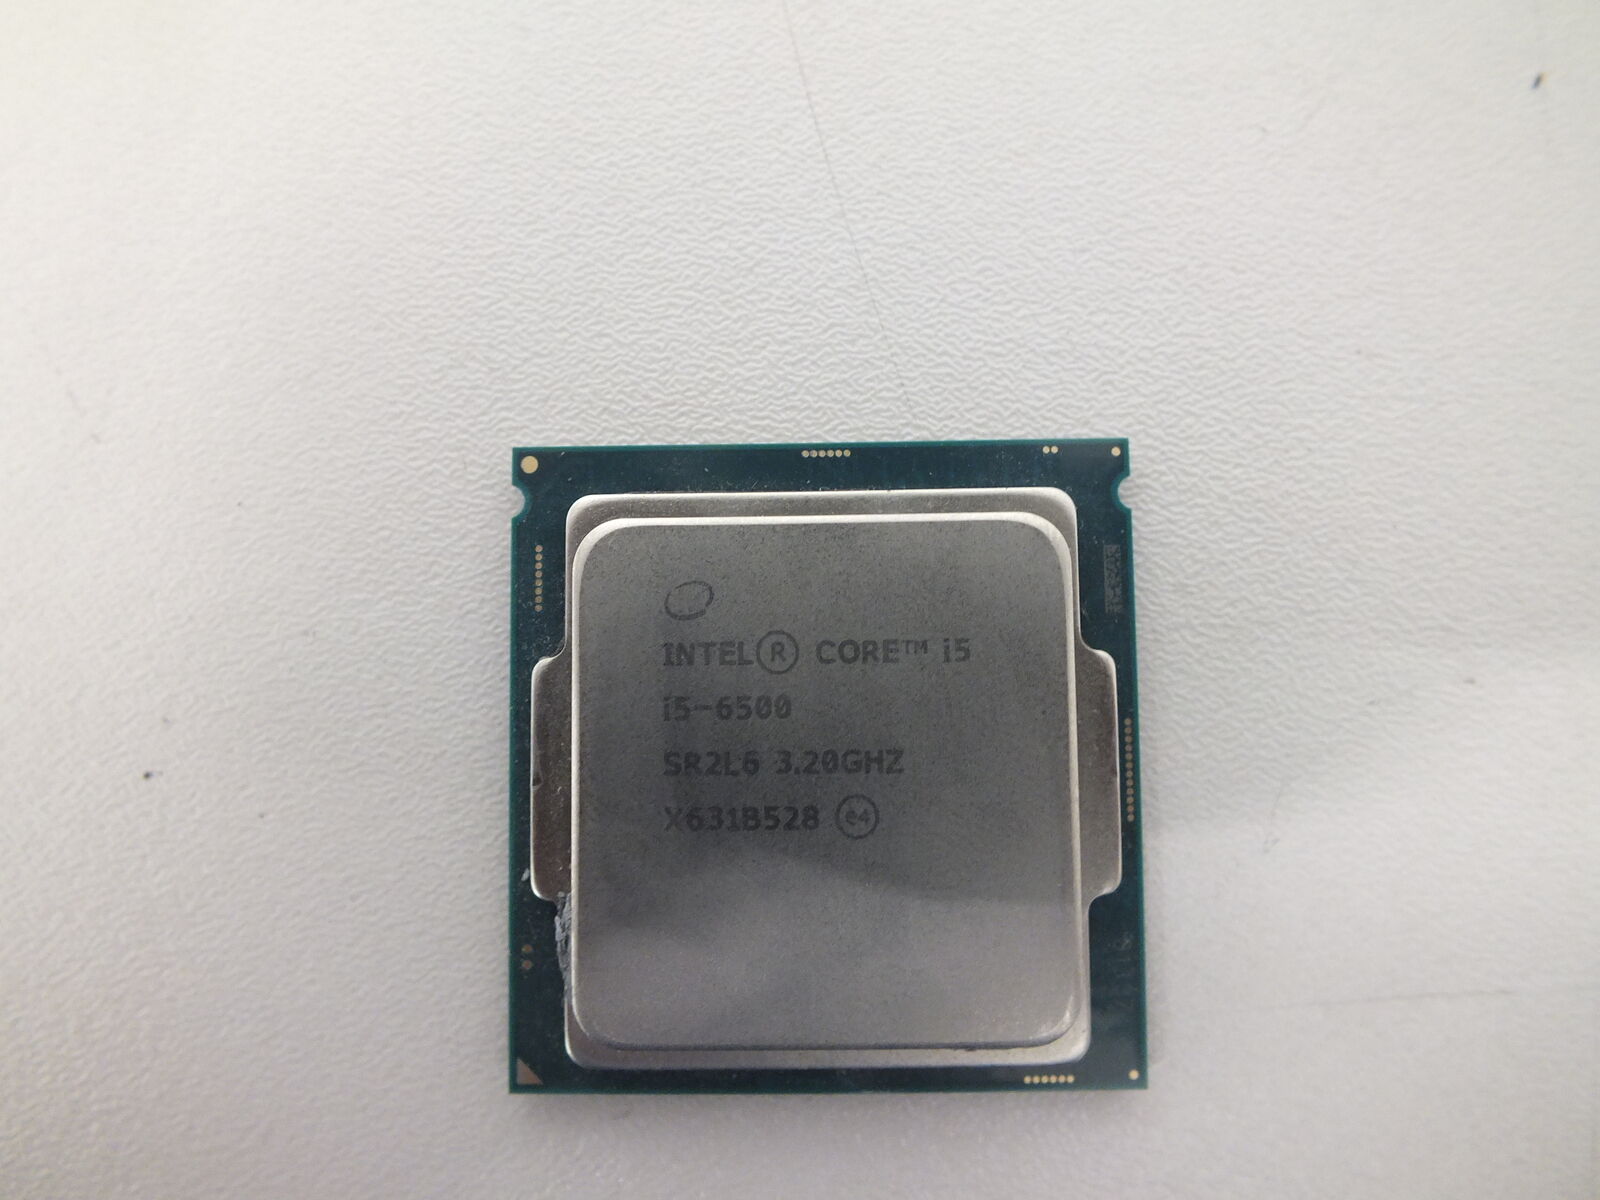 [ LOT OF 14 ] Intel Core i5-6500 SR2L6 3.20 GHZ Processor